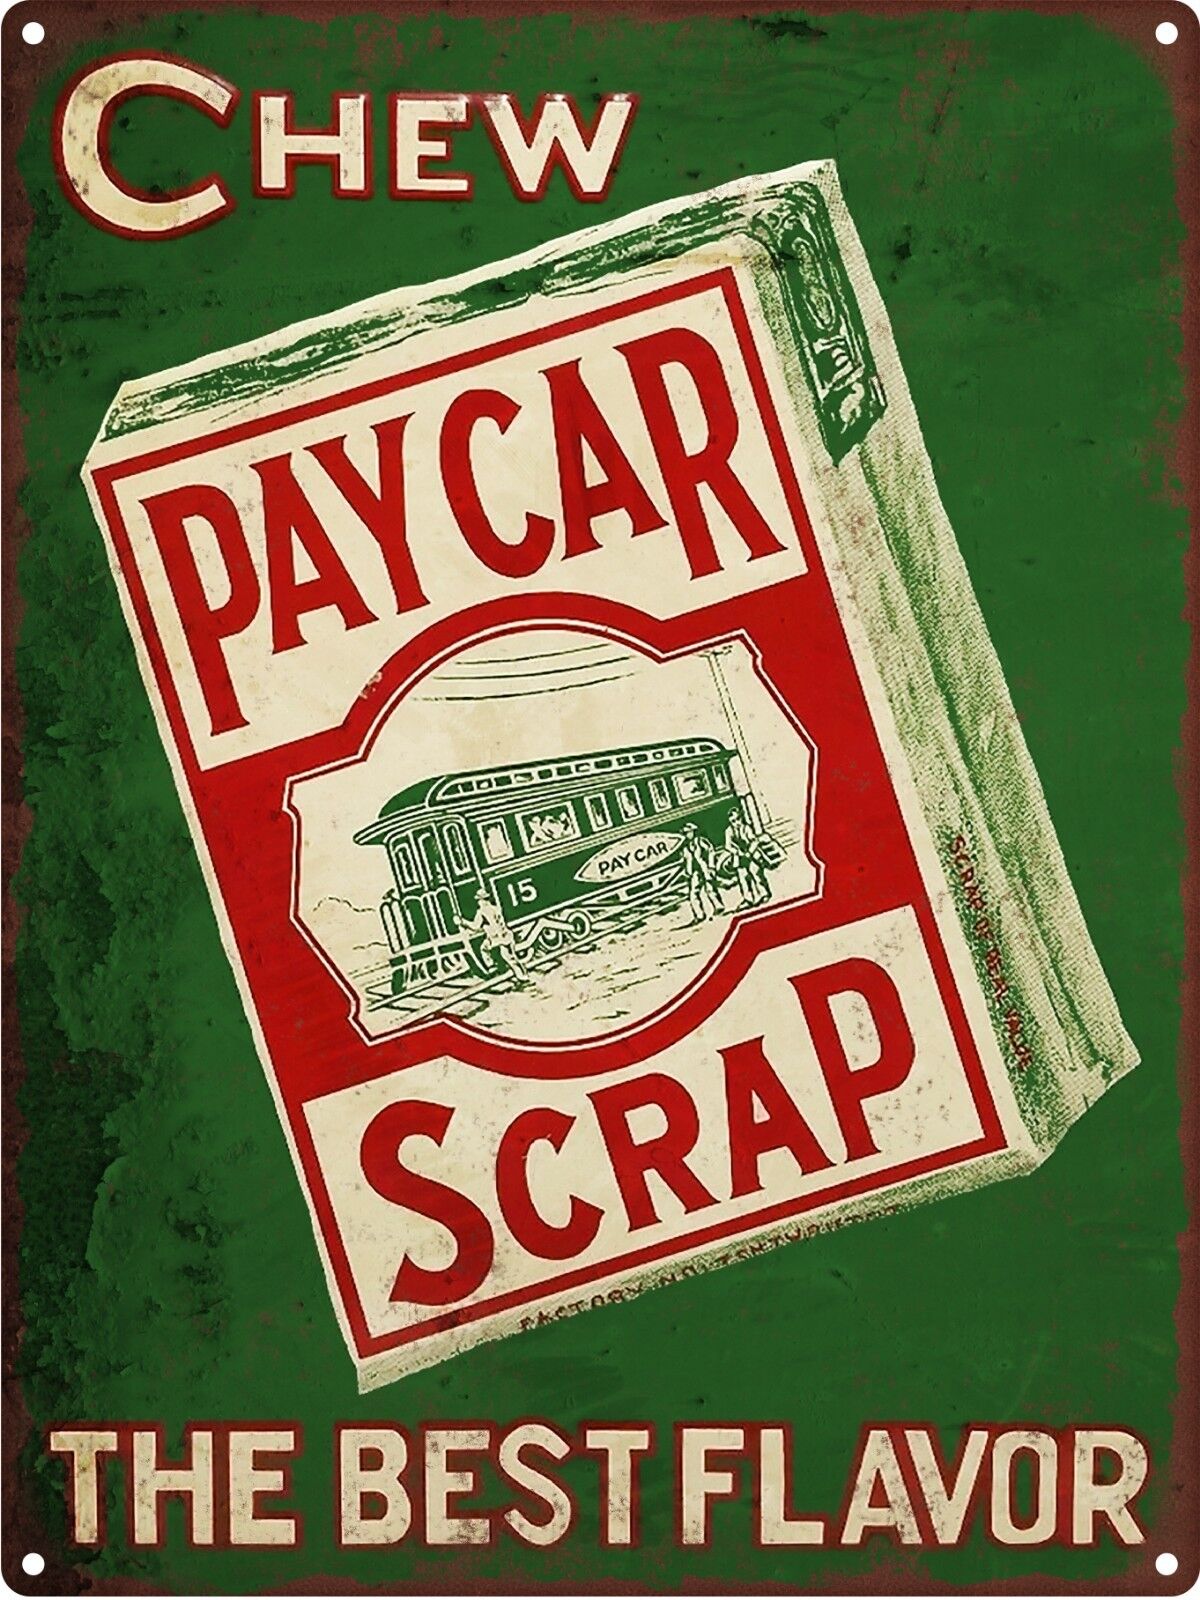 Pay Car Paycar Scrap Chew Tobacco Man Cave Metal Sign 9x12\